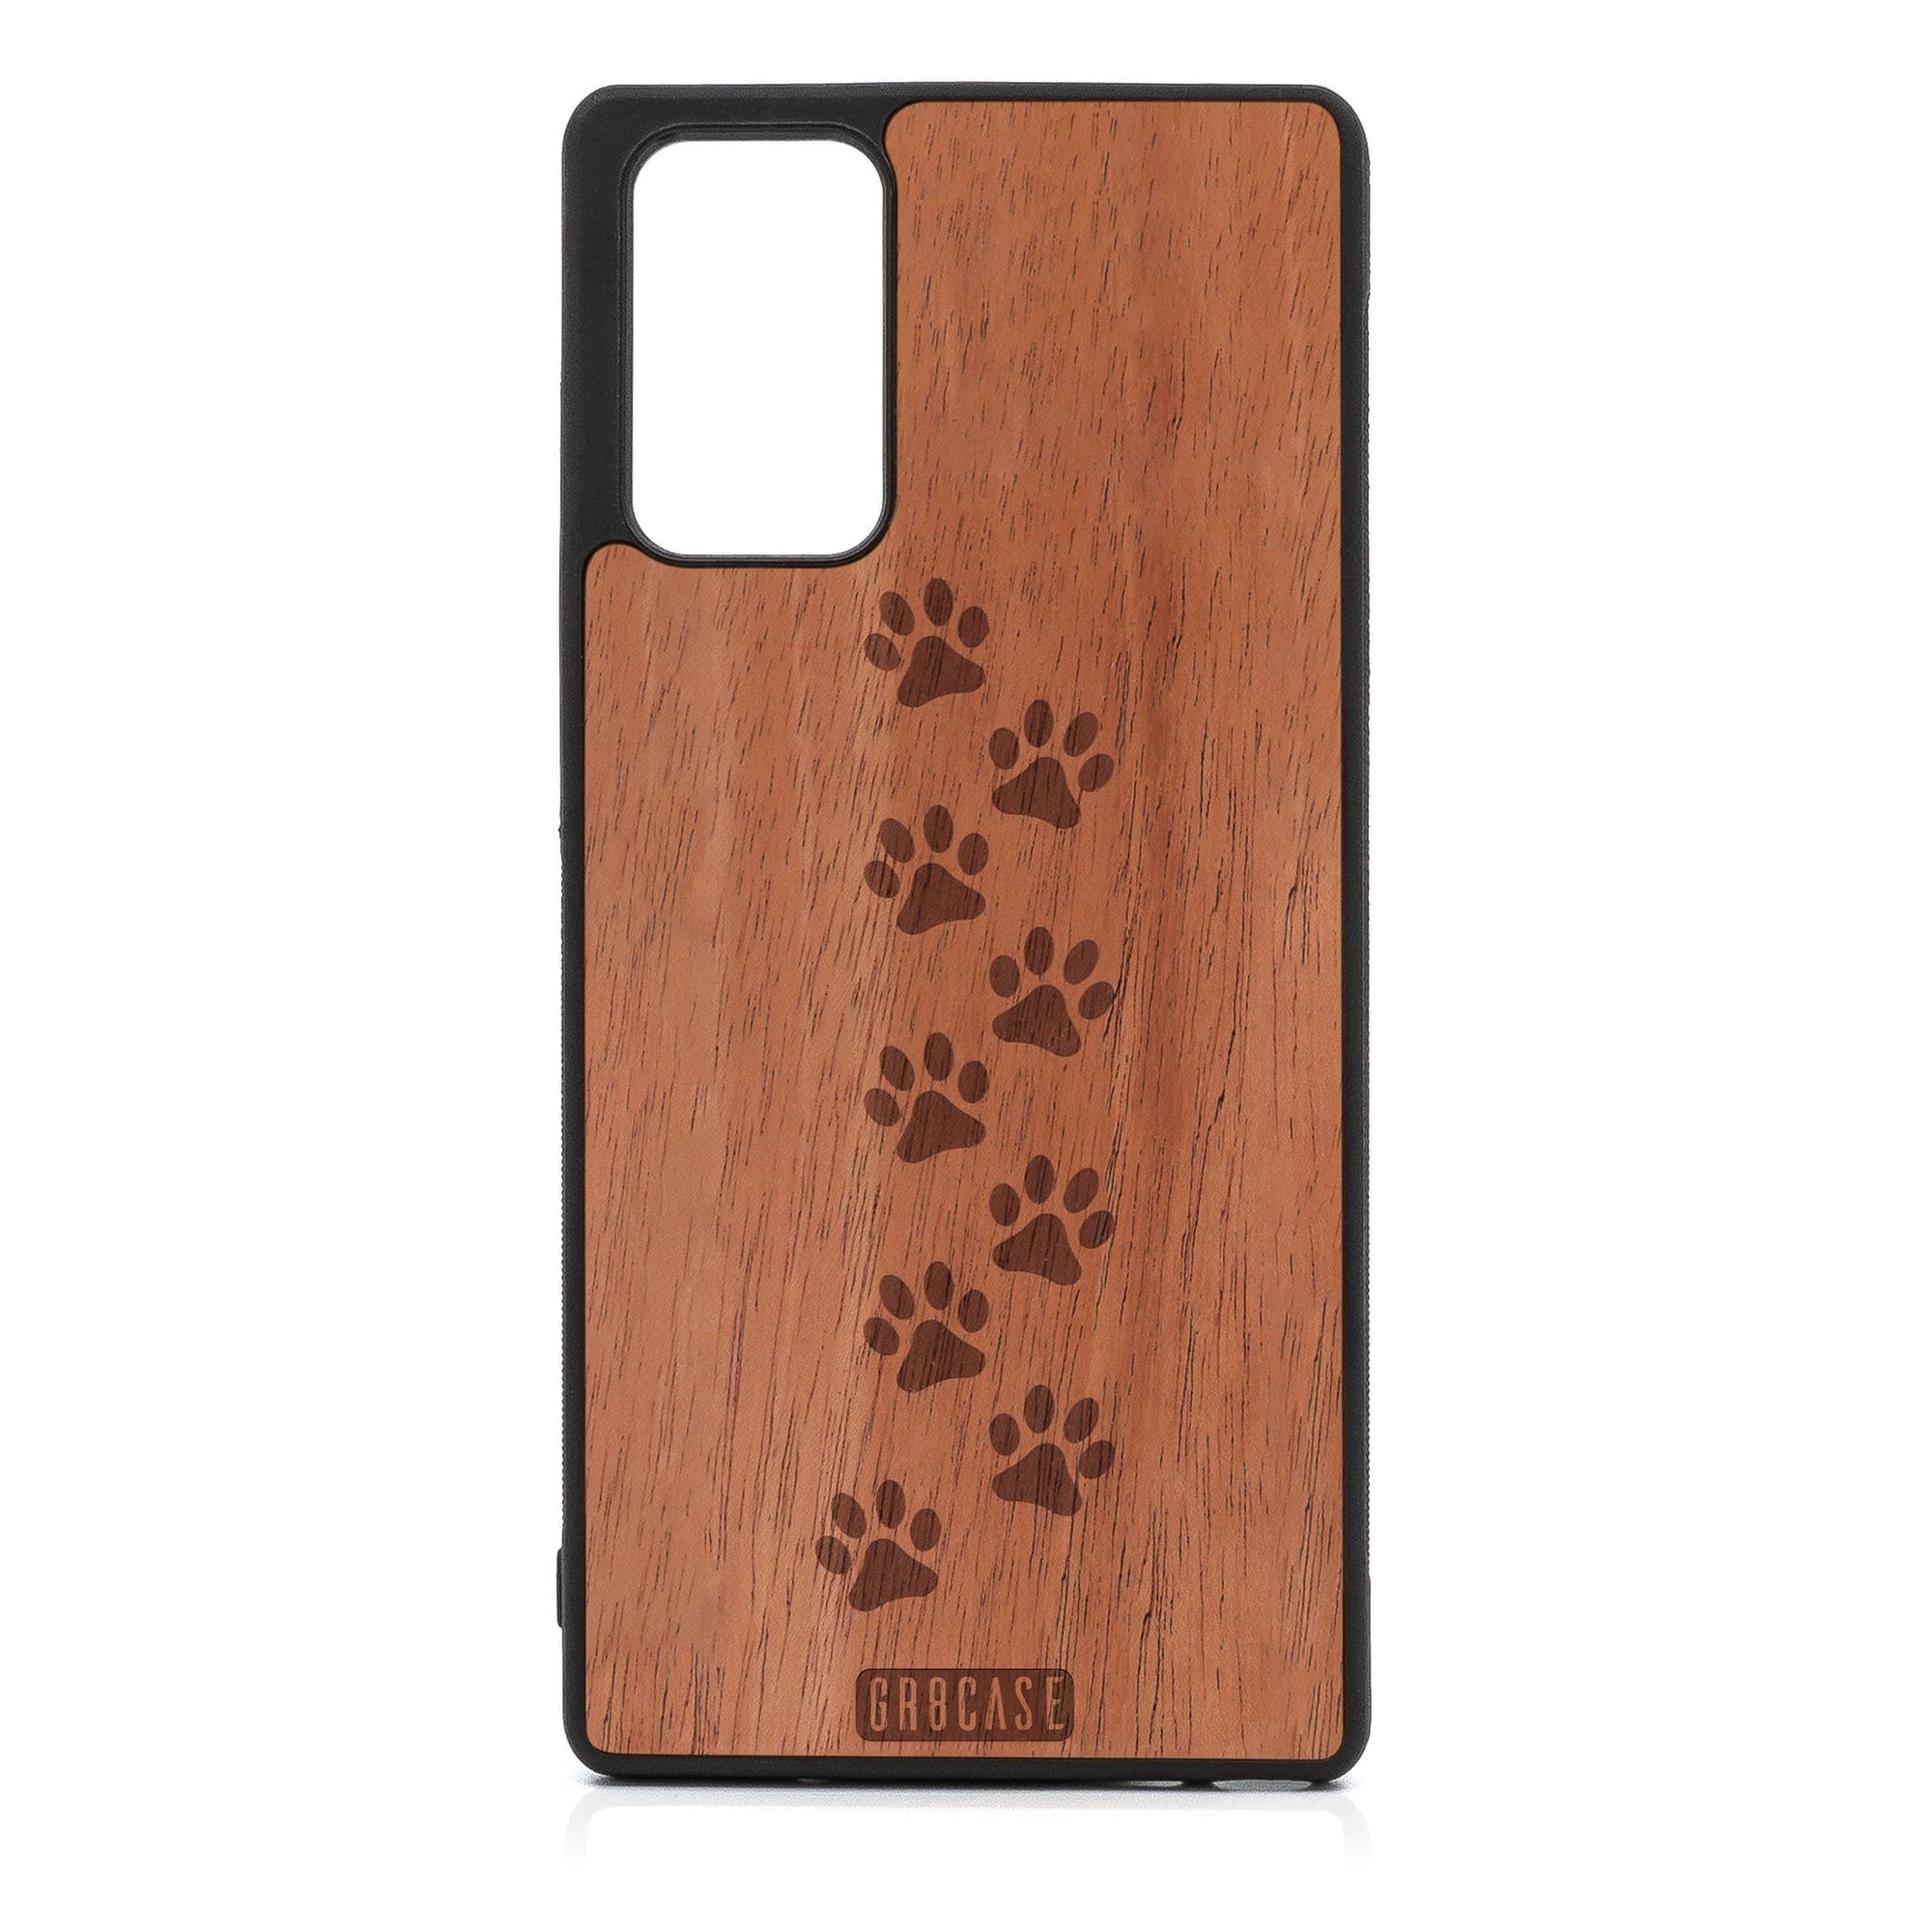 Paw Prints Design Wood Case For Samsung Galaxy A71 5G